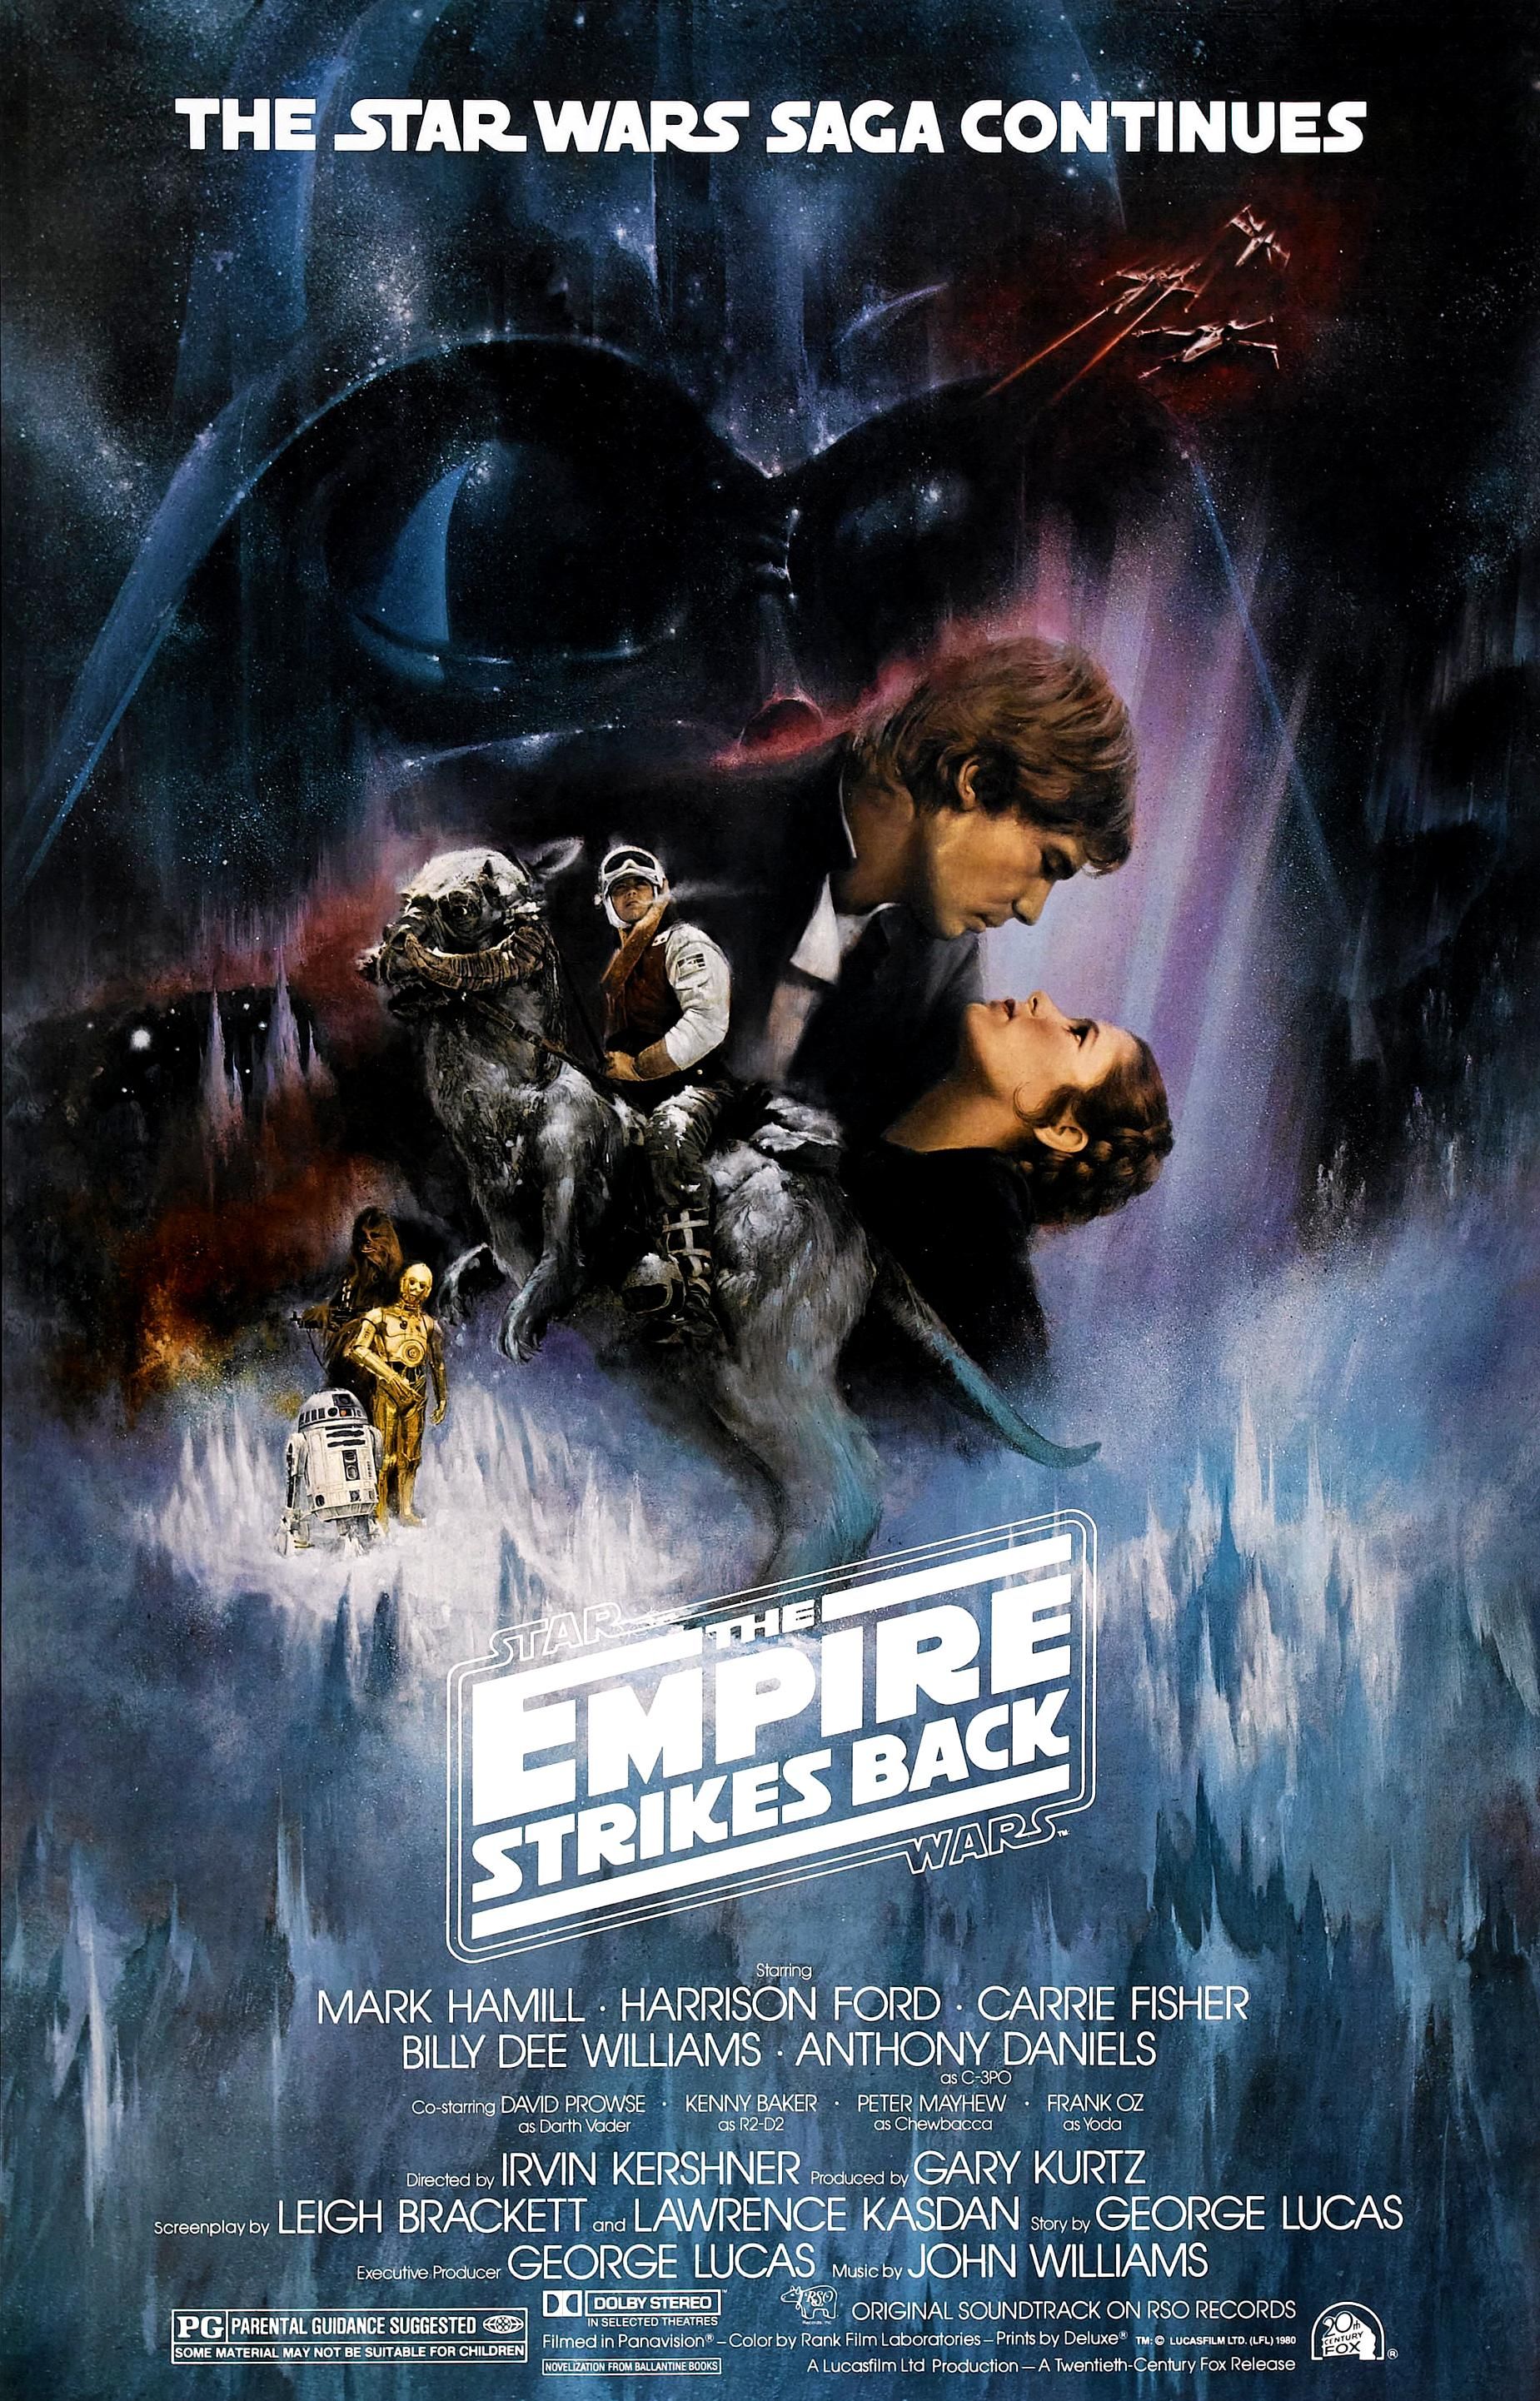 Star Wars Episode V - The Empire Strikes Back Film Poster